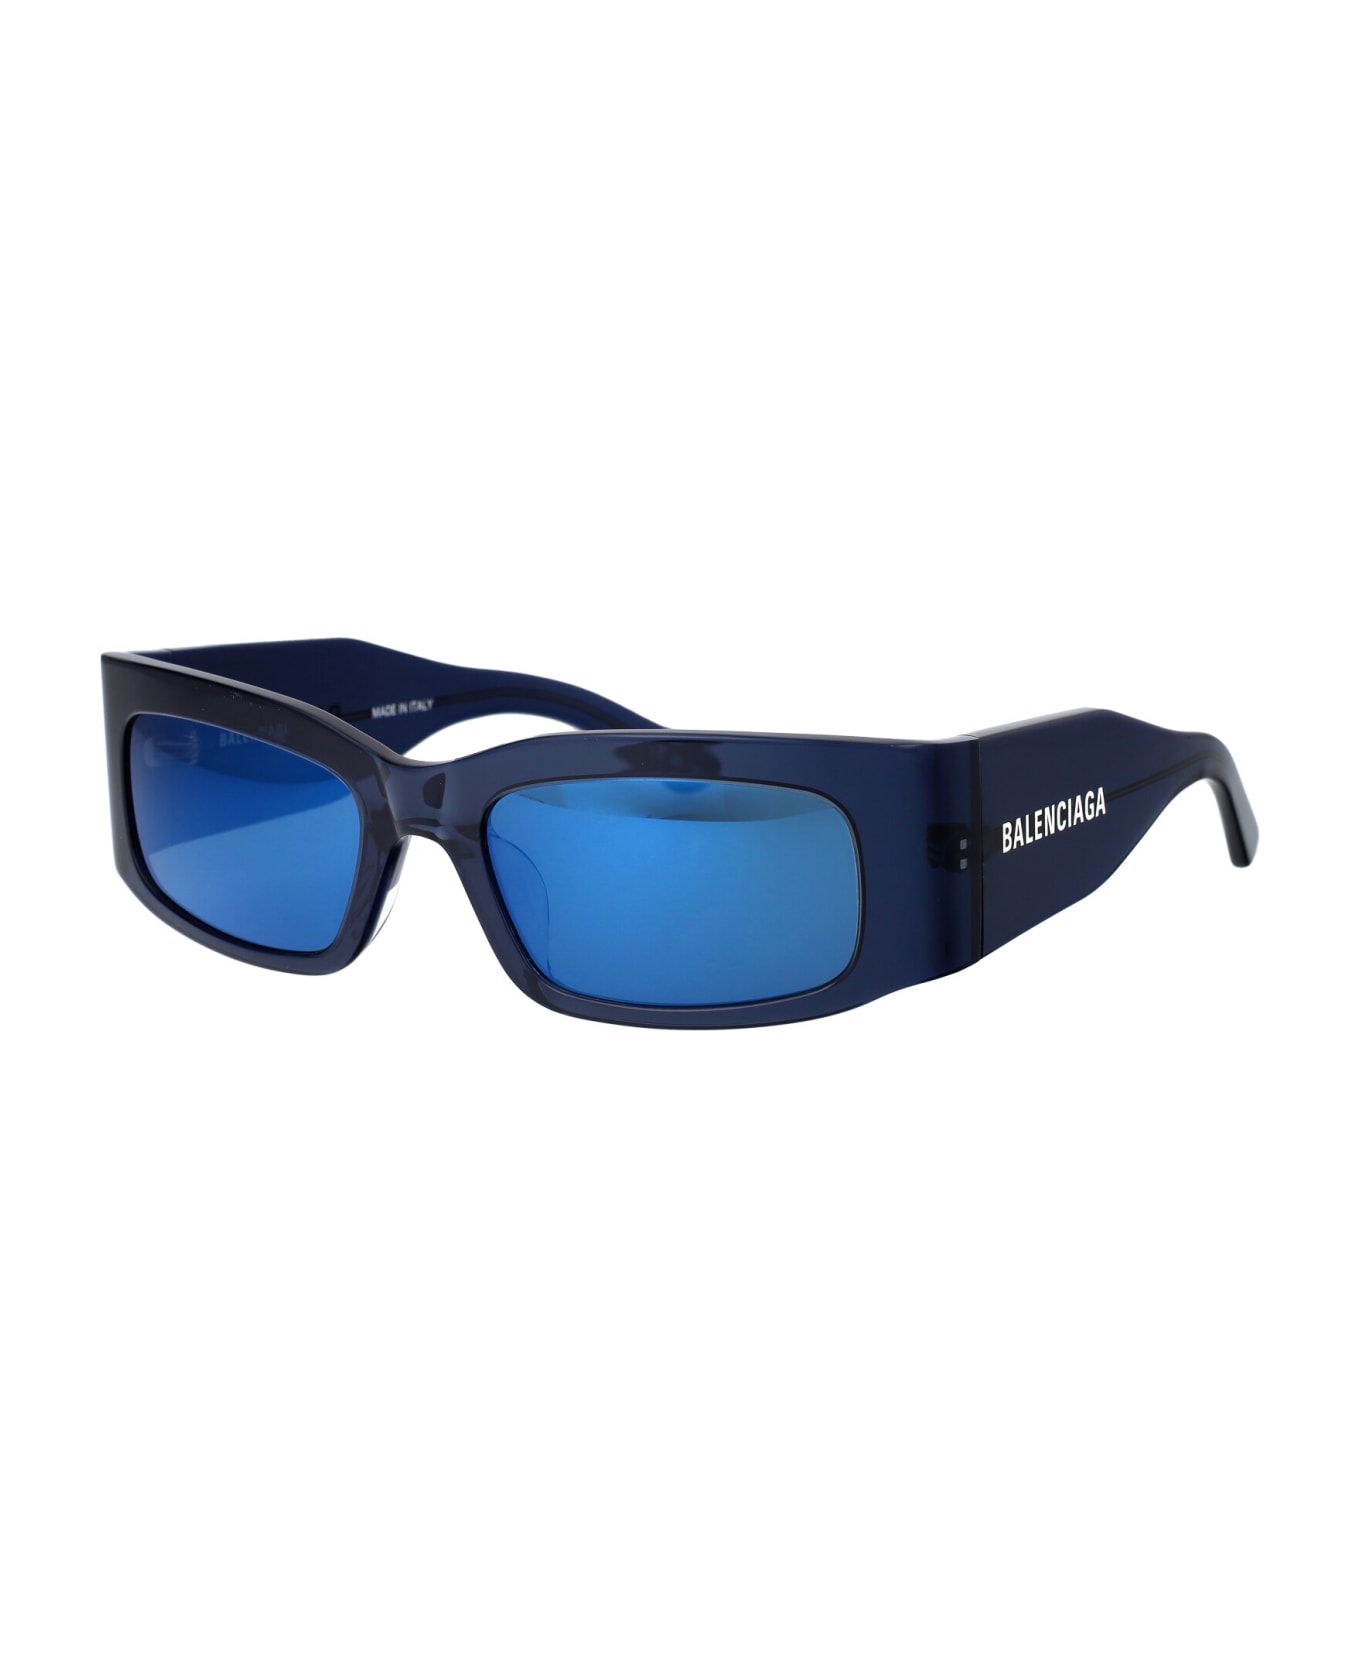 Balenciaga Eyewear Bb0328s Sunglasses - 004 BLUE BLUE BLUE